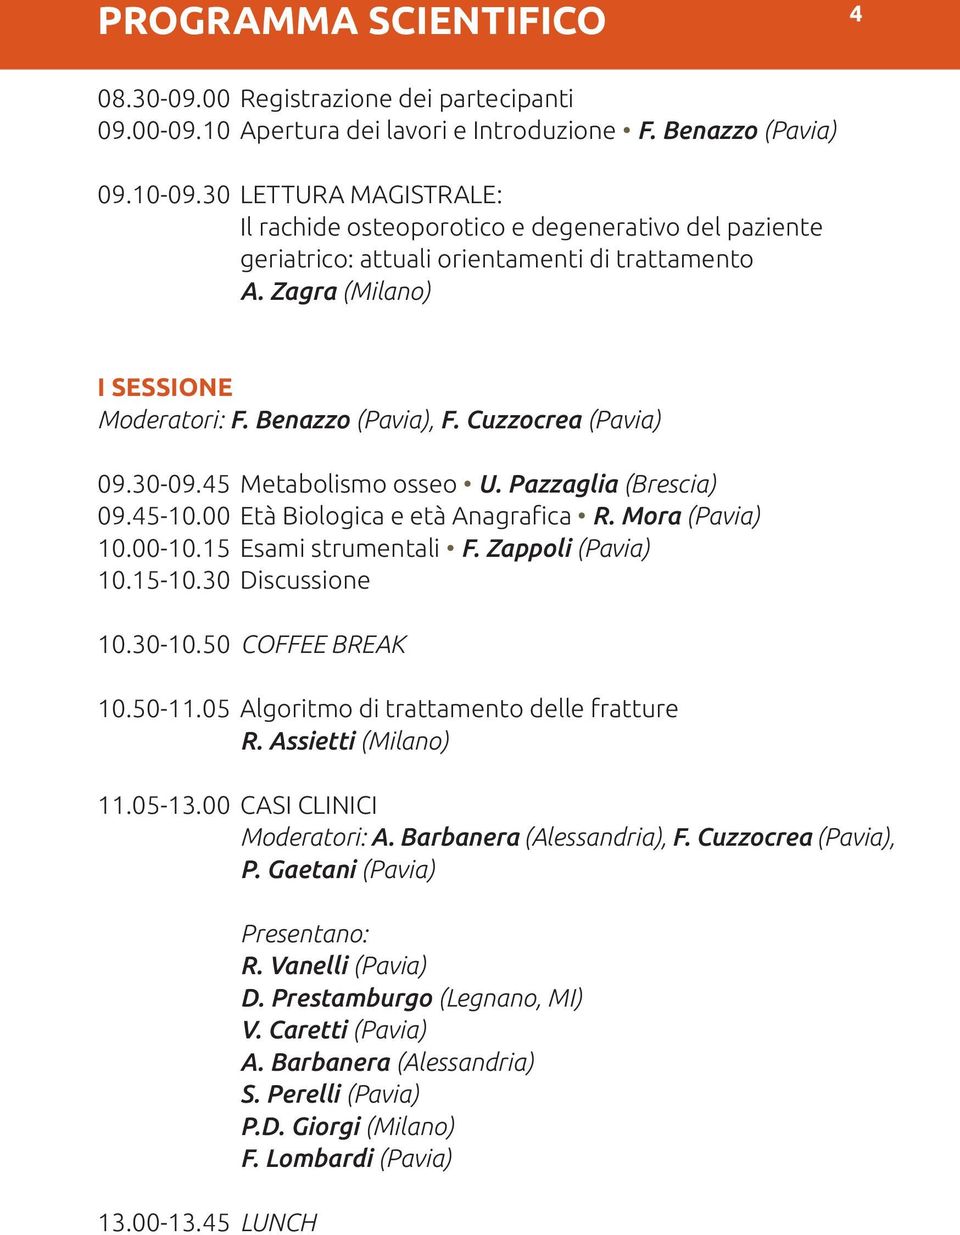 Cuzzocrea (Pavia) 09.30-09.45 Metabolismo osseo U. Pazzaglia (Brescia) 09.45-10.00 Età Biologica e età Anagrafica R. Mora (Pavia) 10.00-10.15 Esami strumentali F. Zappoli (Pavia) 10.15-10.